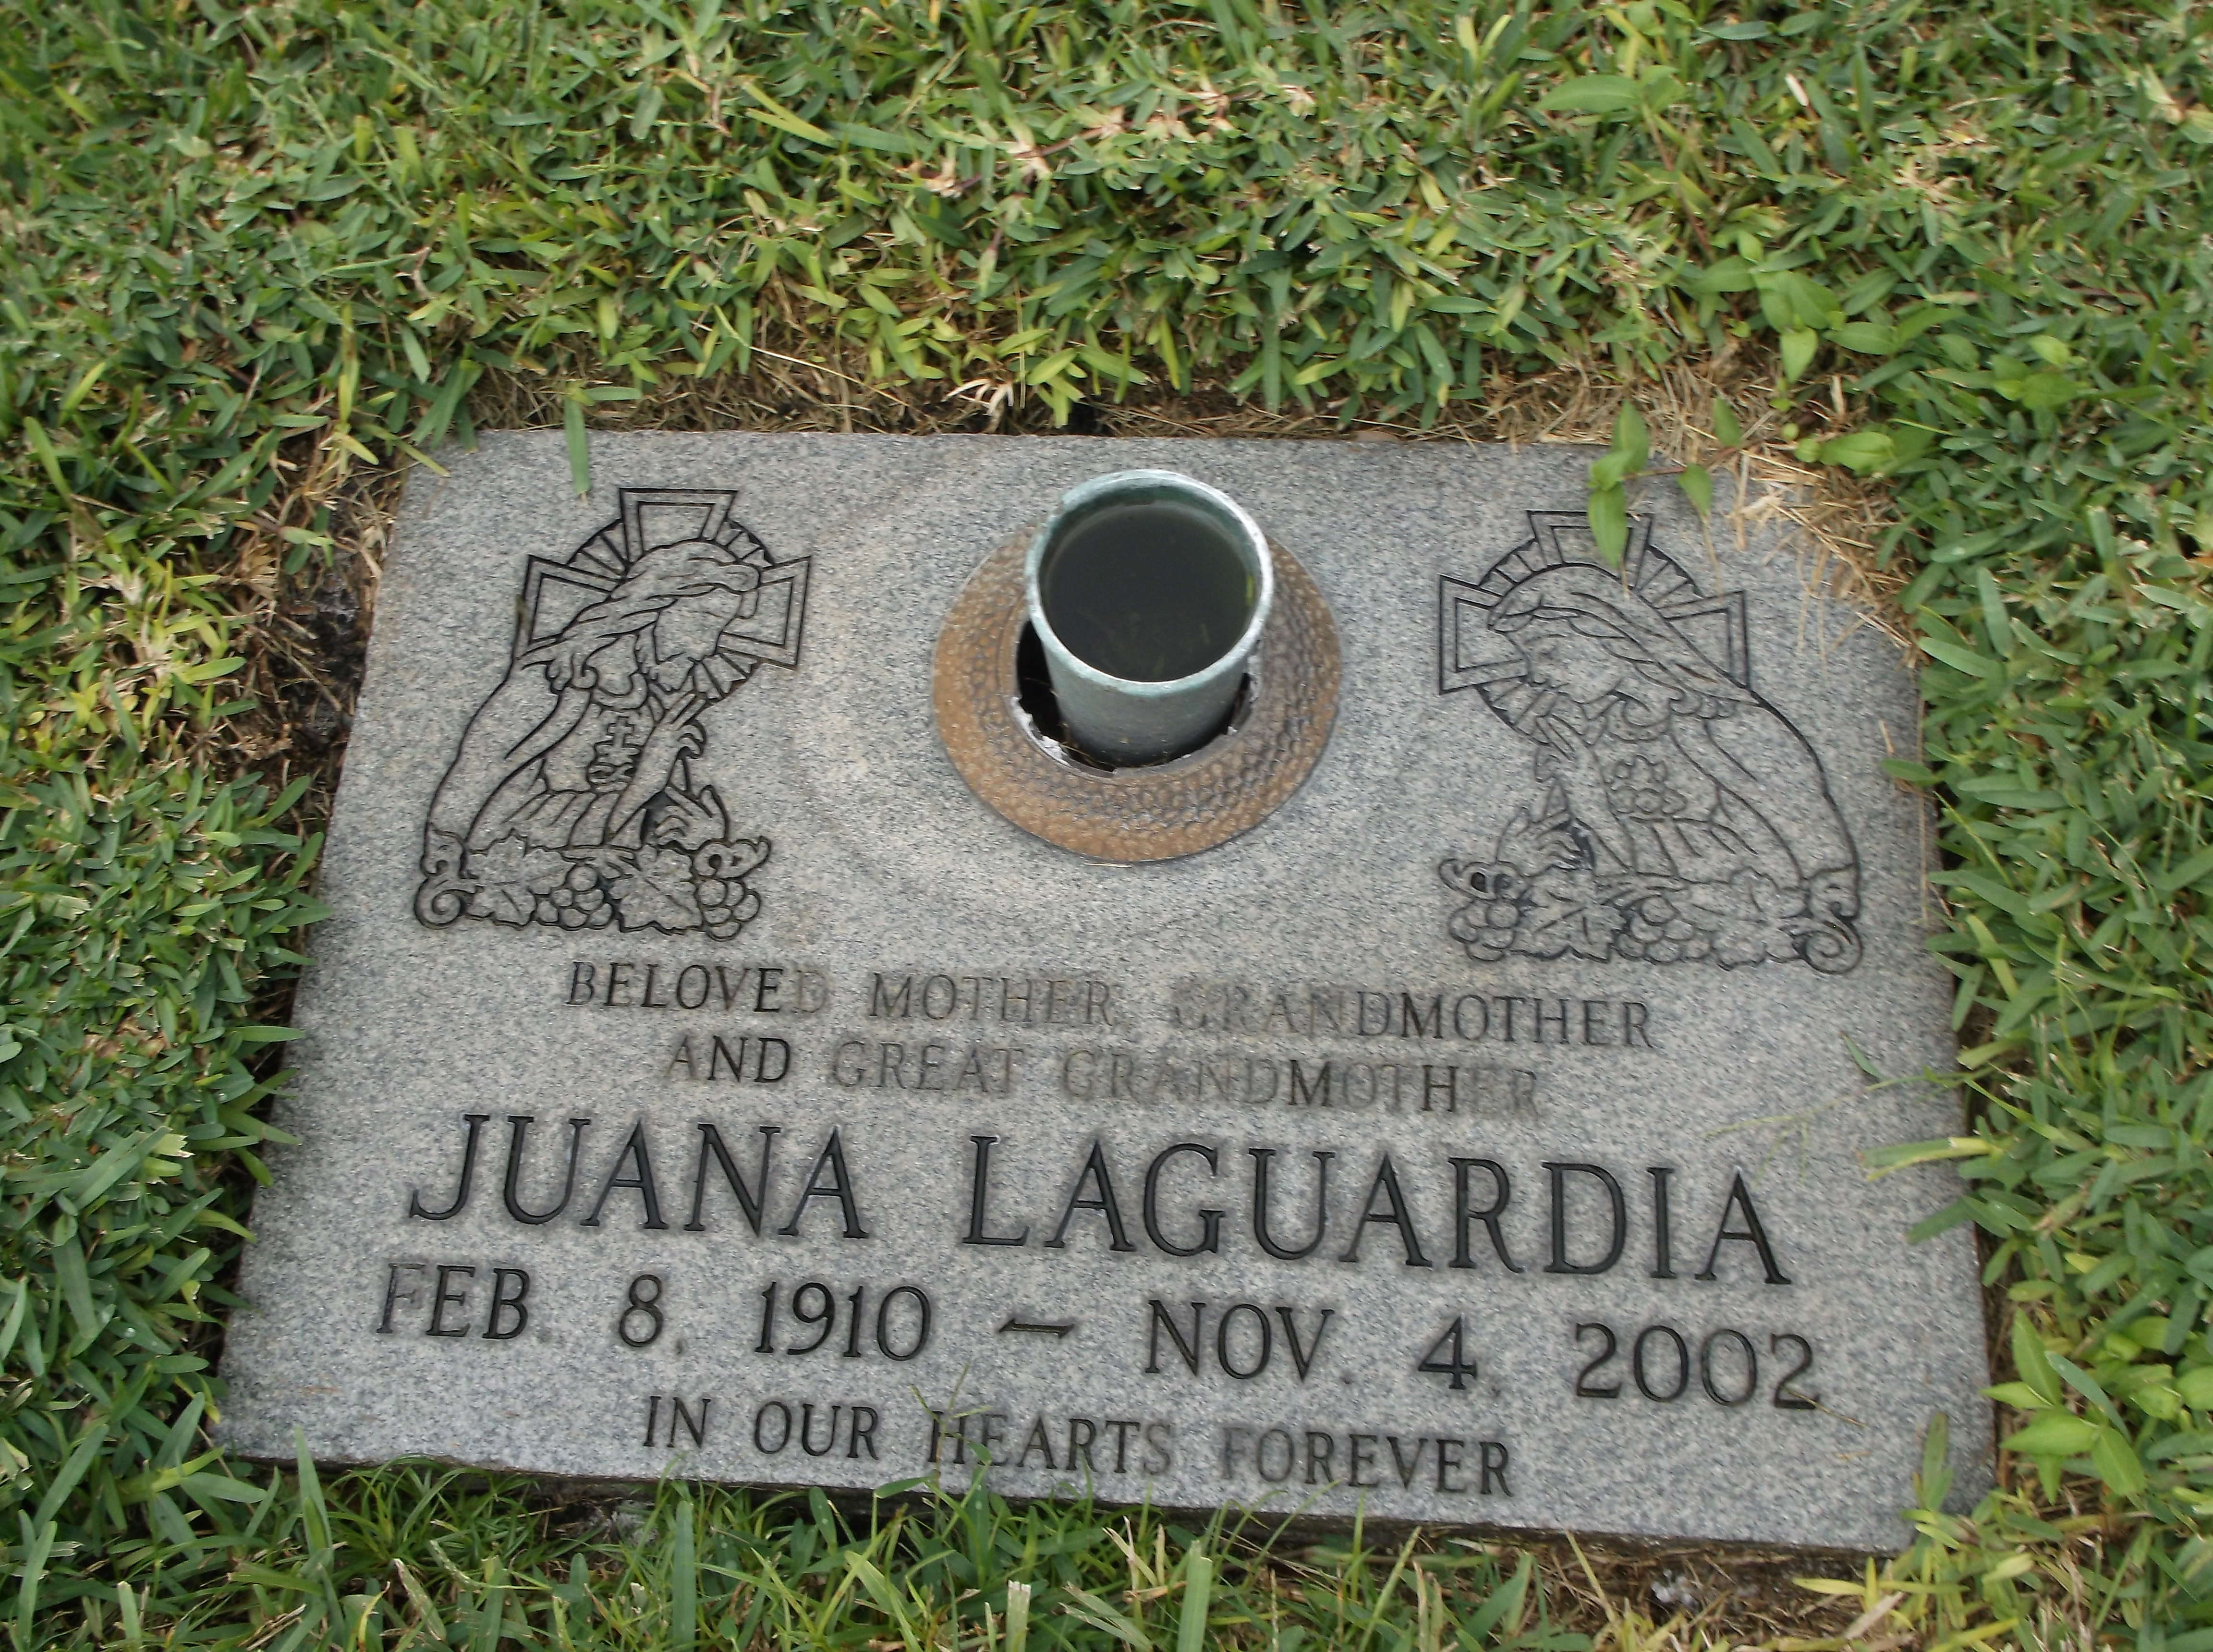 Juana Laguardia